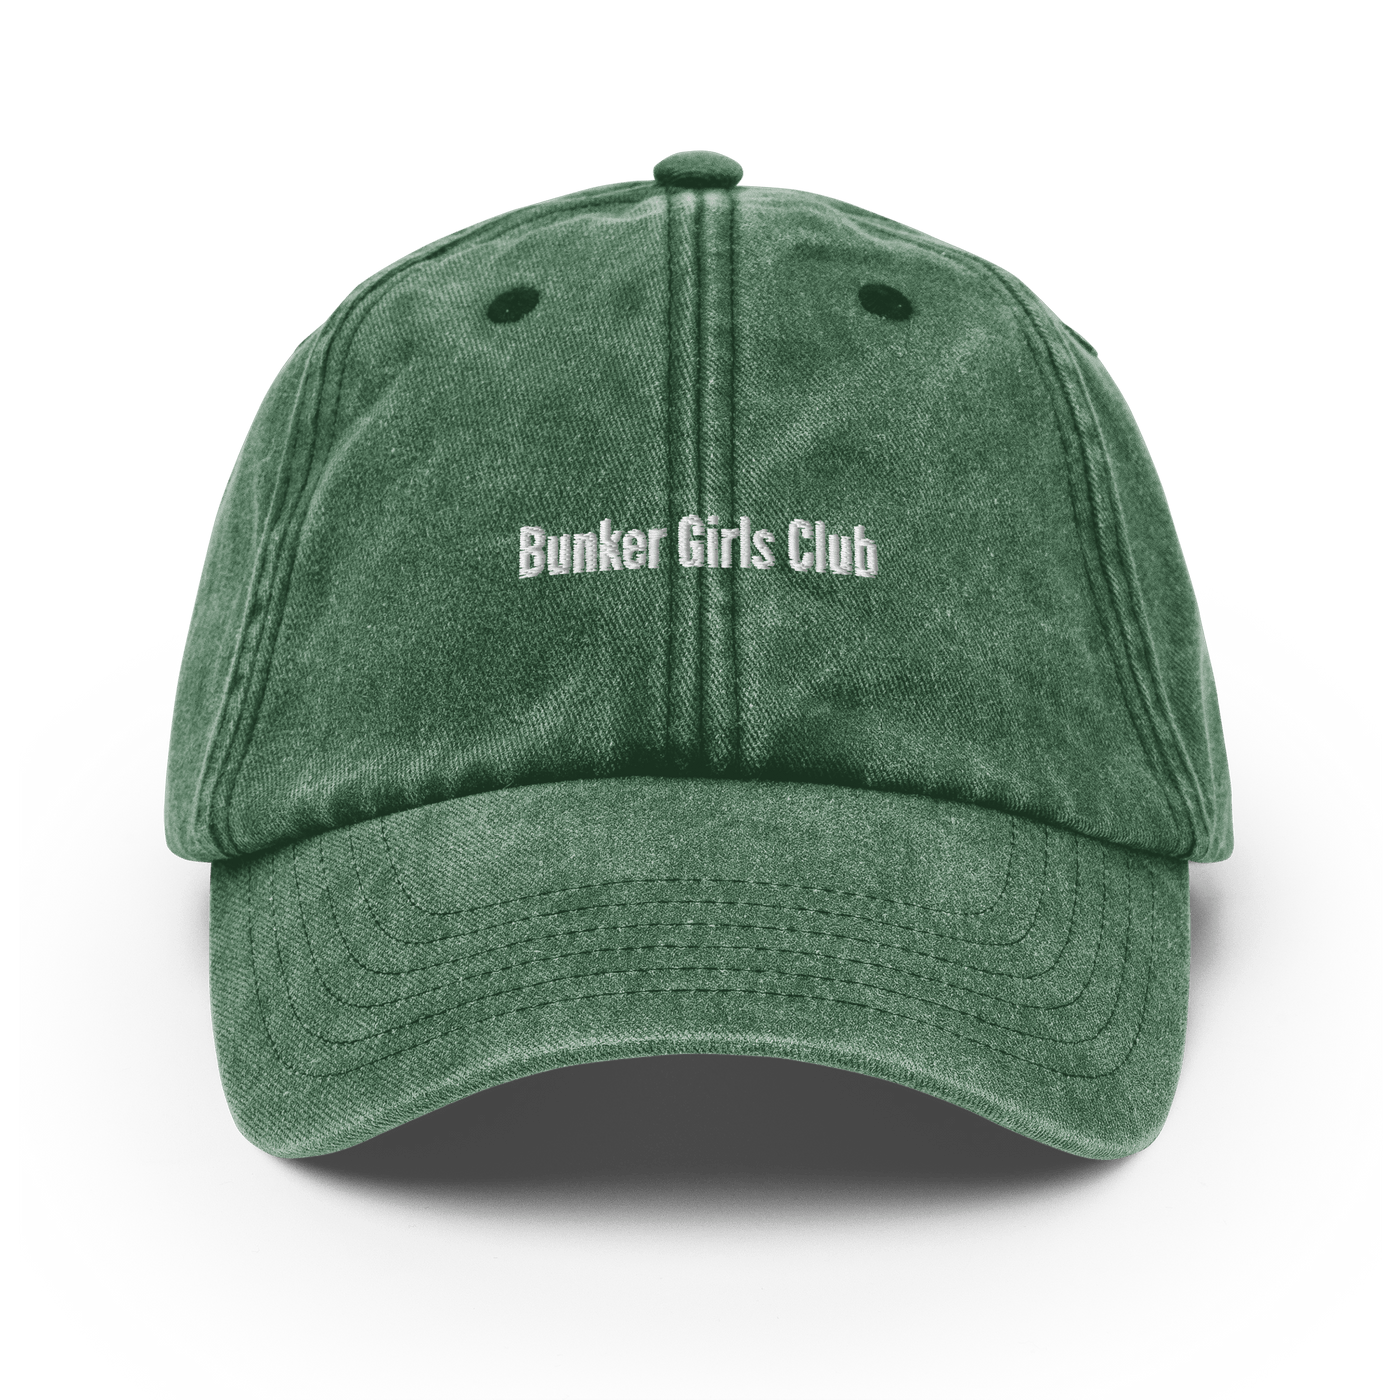 Bunker Girls Club Vintage Hat - Vintage Bottle Green - - Just Another Cap Store